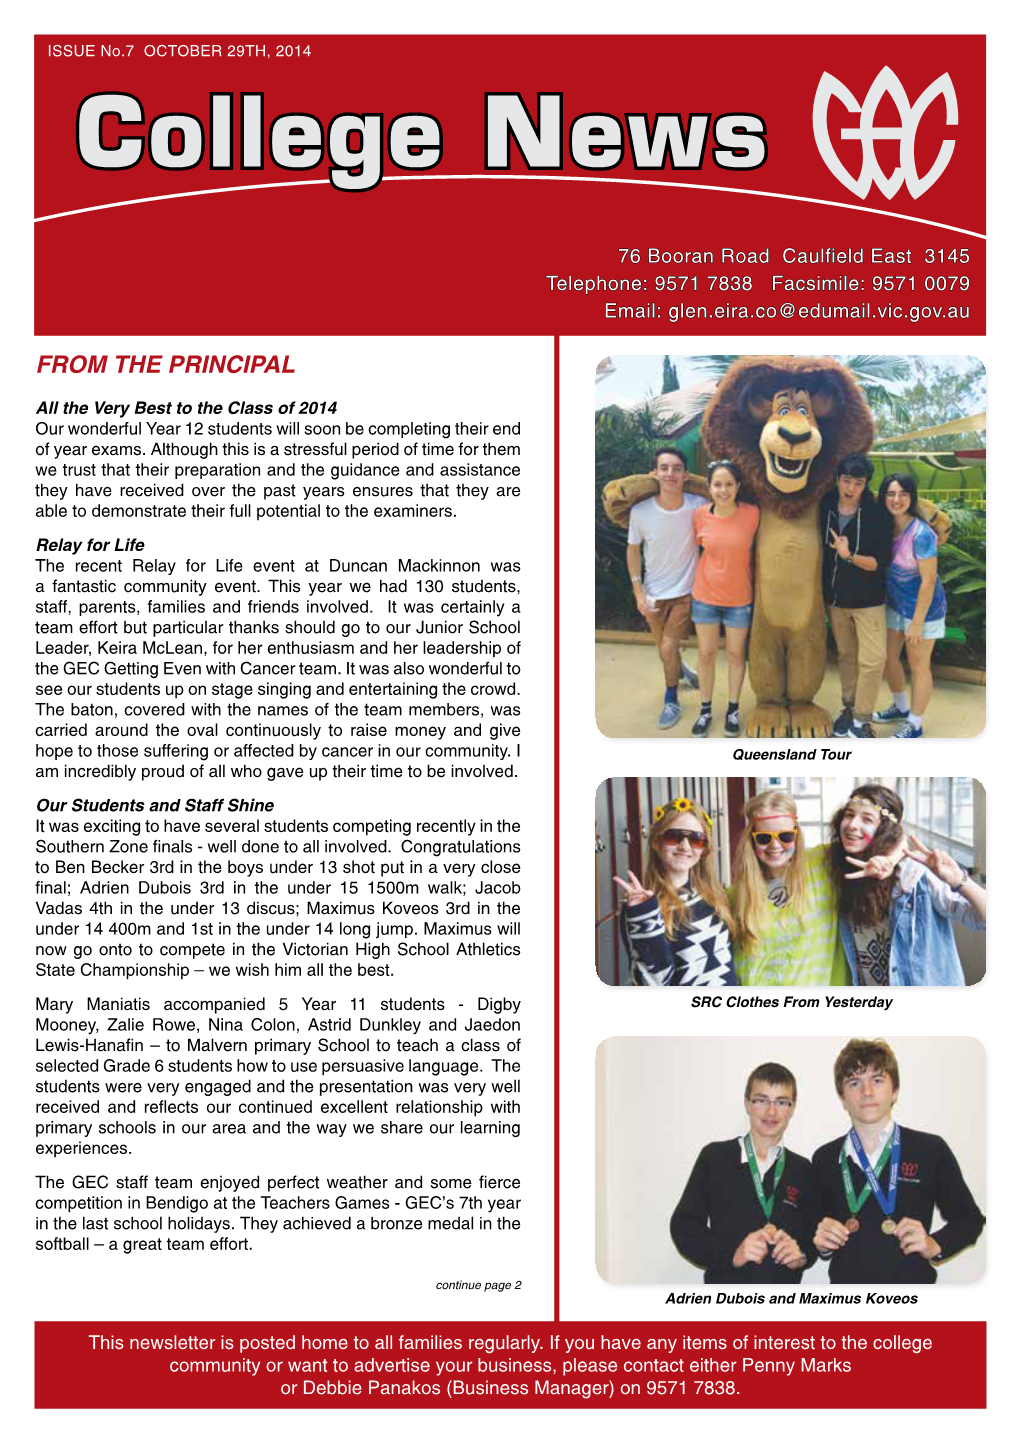 GEC College News Issue 7 October 2014